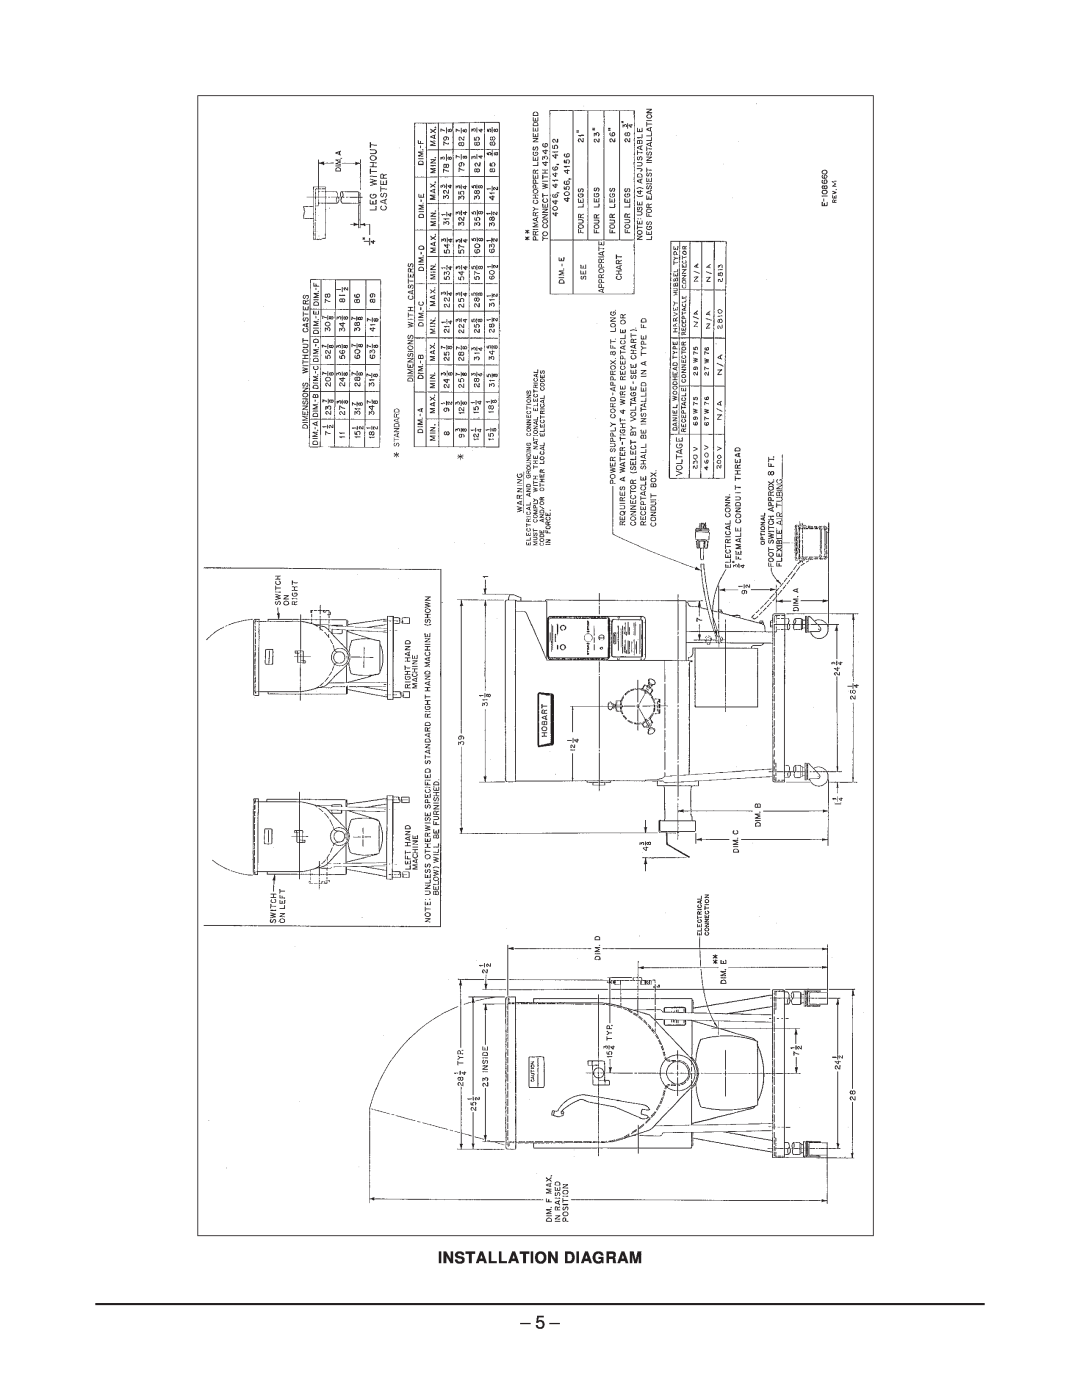 Hobart 4346 manual Installation Diagram 